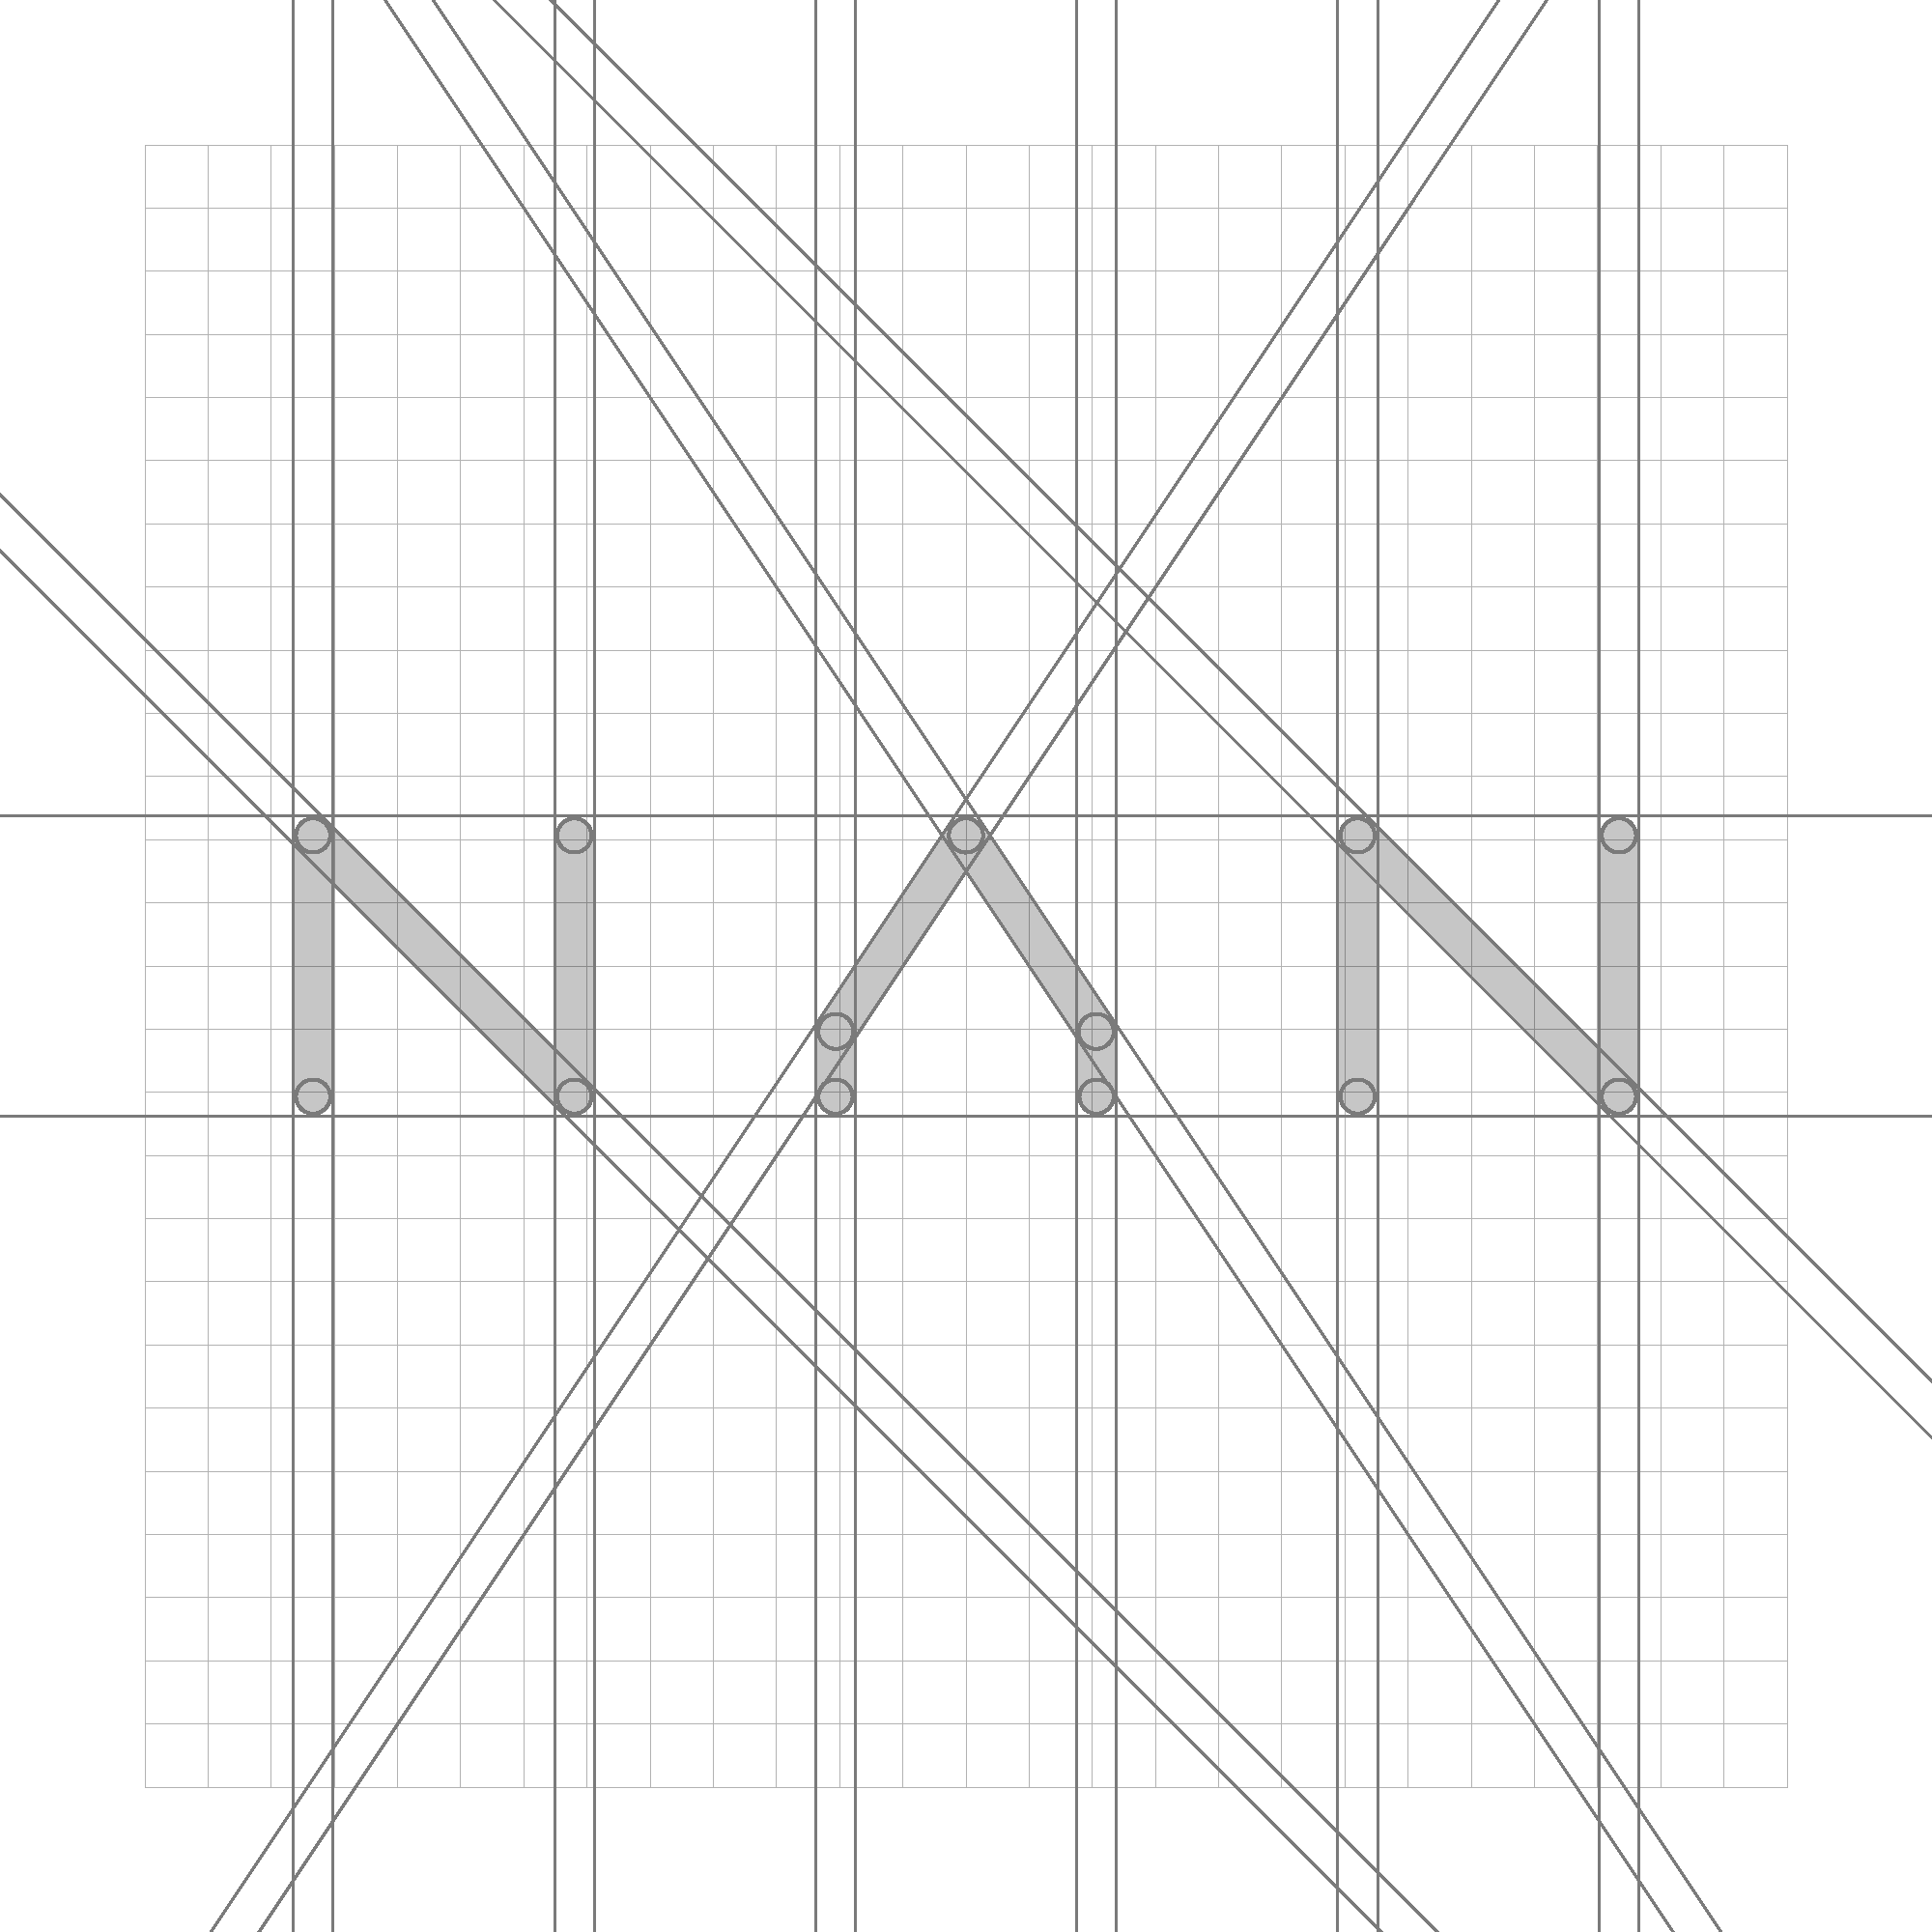 NAN_Constructed